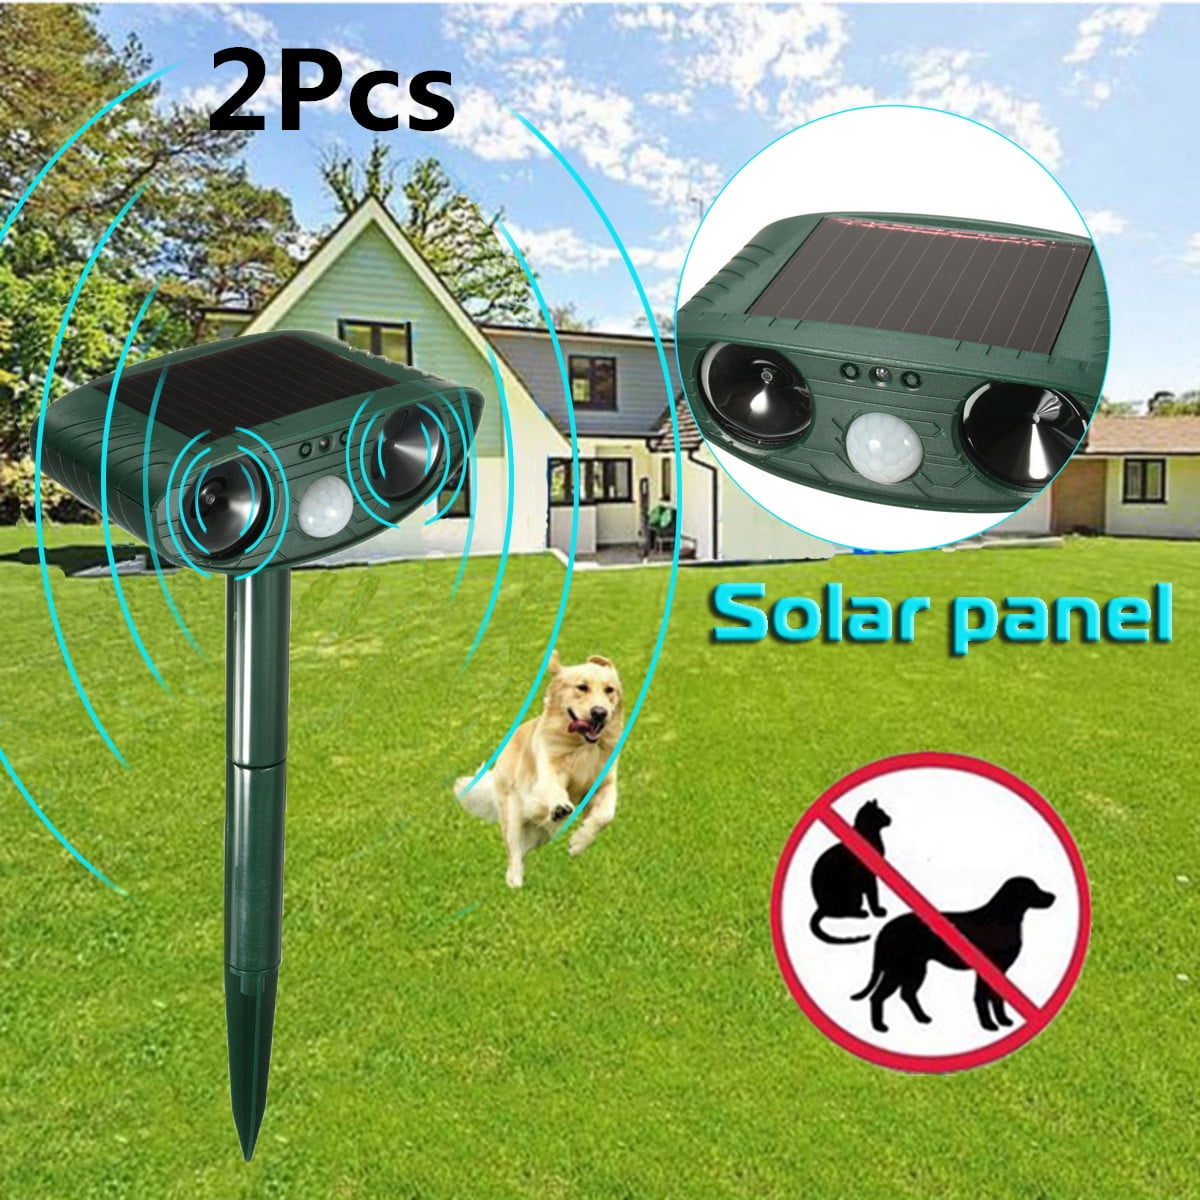 2Pcs Solar Power Repellent Cat Scarer Deterrent Dog Fox Pest Animal Repellers 